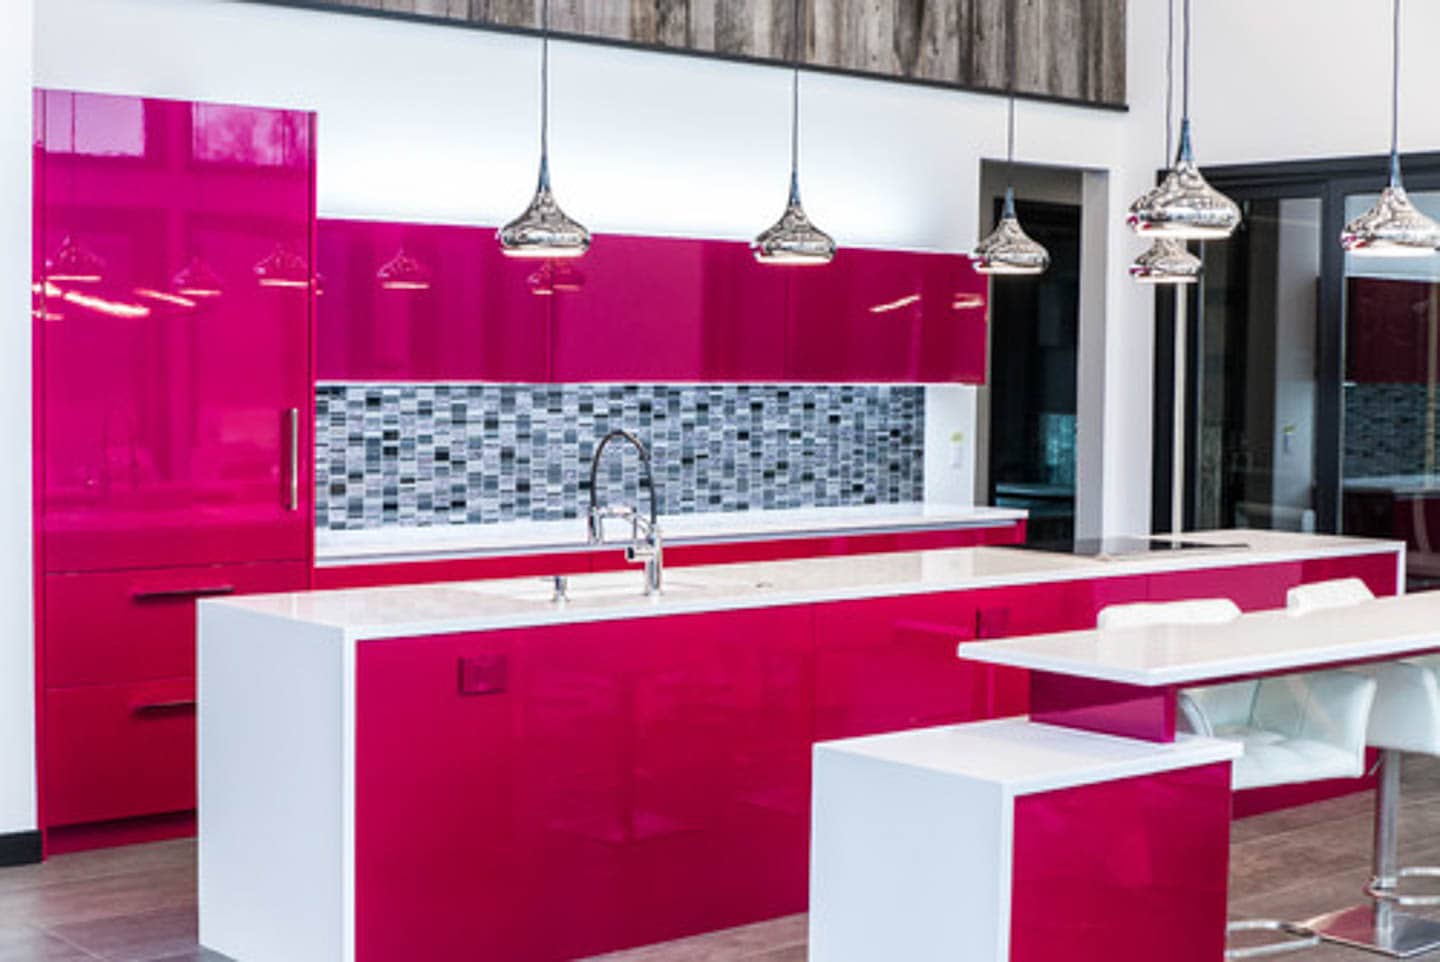 Modern kitchen with high gloss fuchsia cabinets, white waterfall countertops and black and gray backsplash